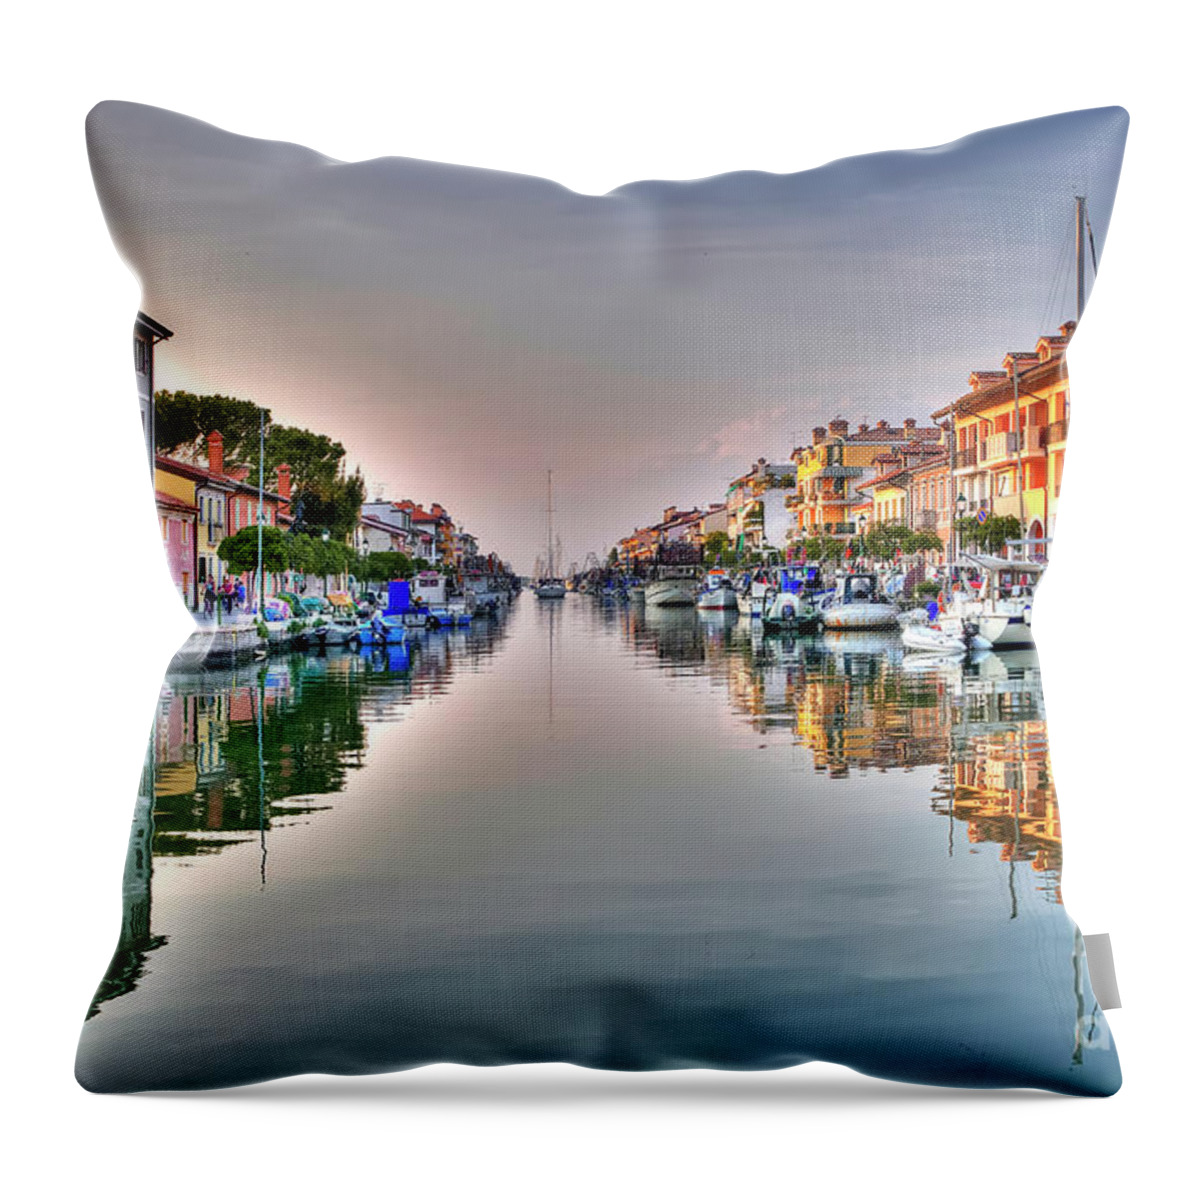 Boat Throw Pillow featuring the photograph Porto Mandracchio - Grado - Italy by Paolo Signorini